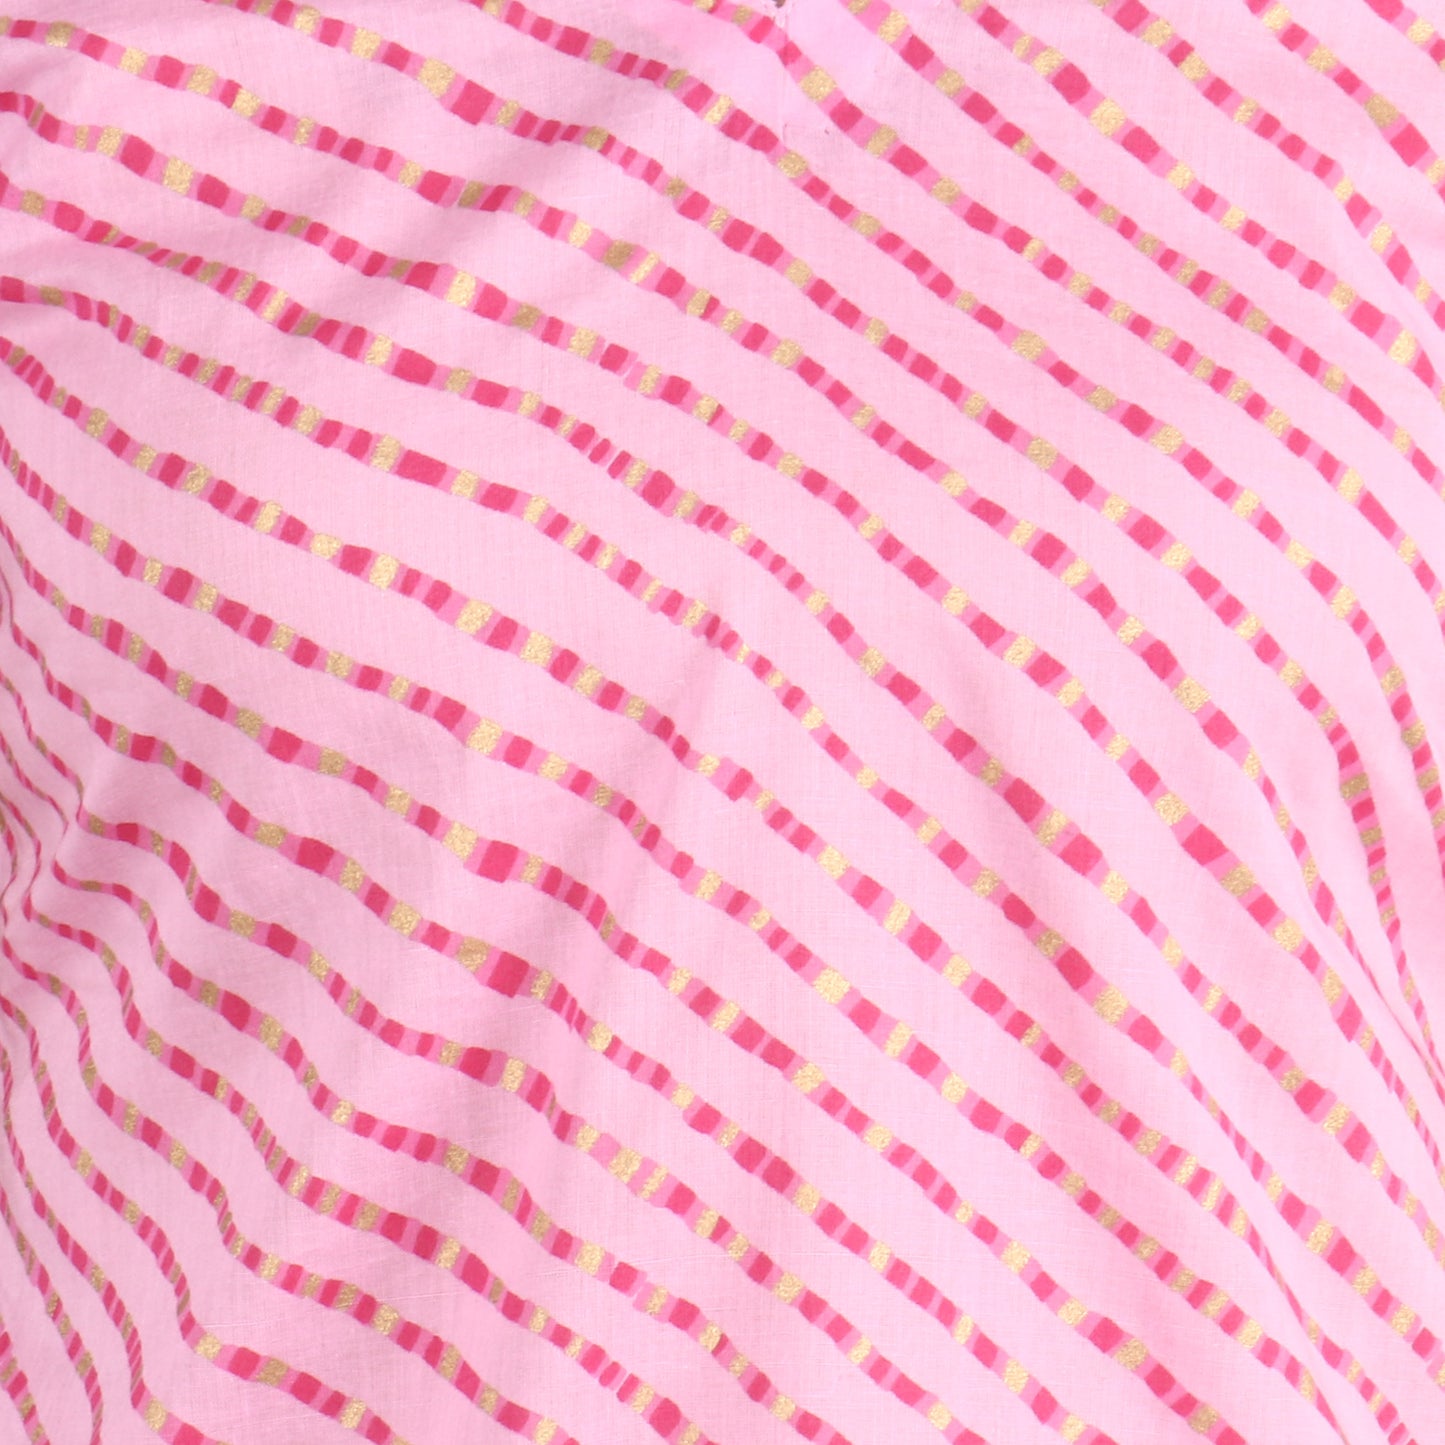 Pink Gold Printed Night Suit | Apella.